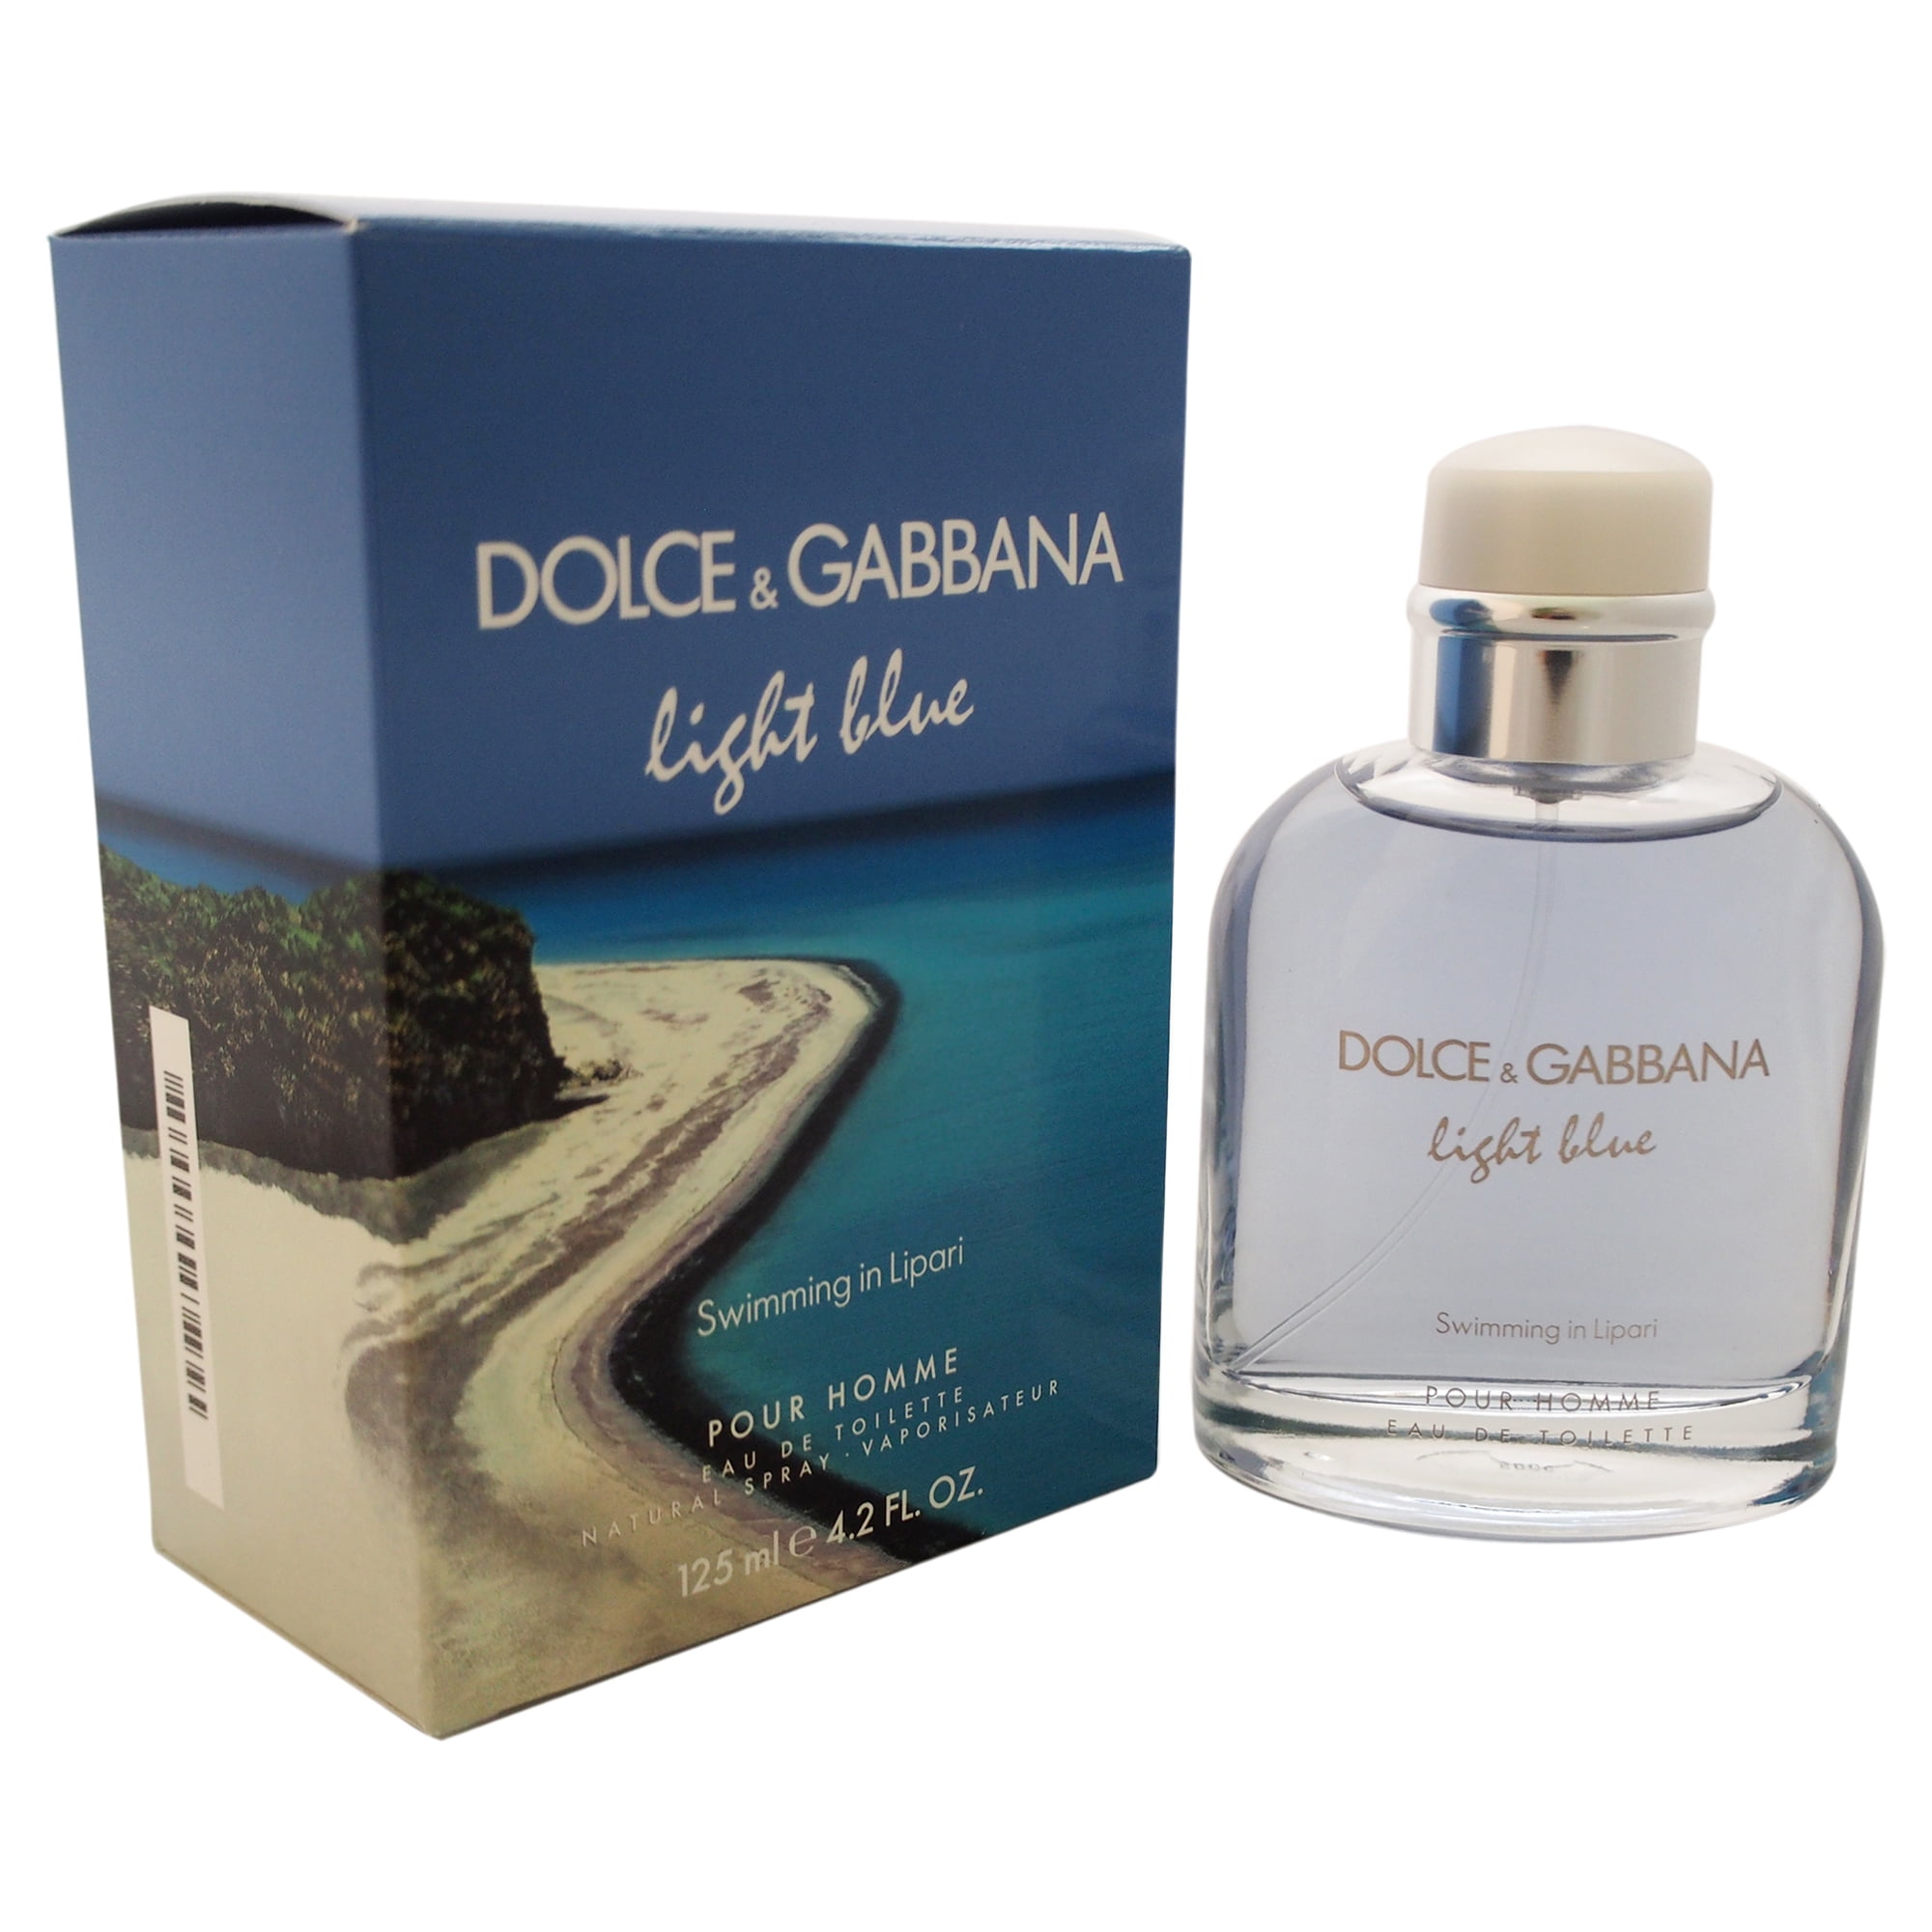 dolce&gabbana light blue pour homme swimming in lipari